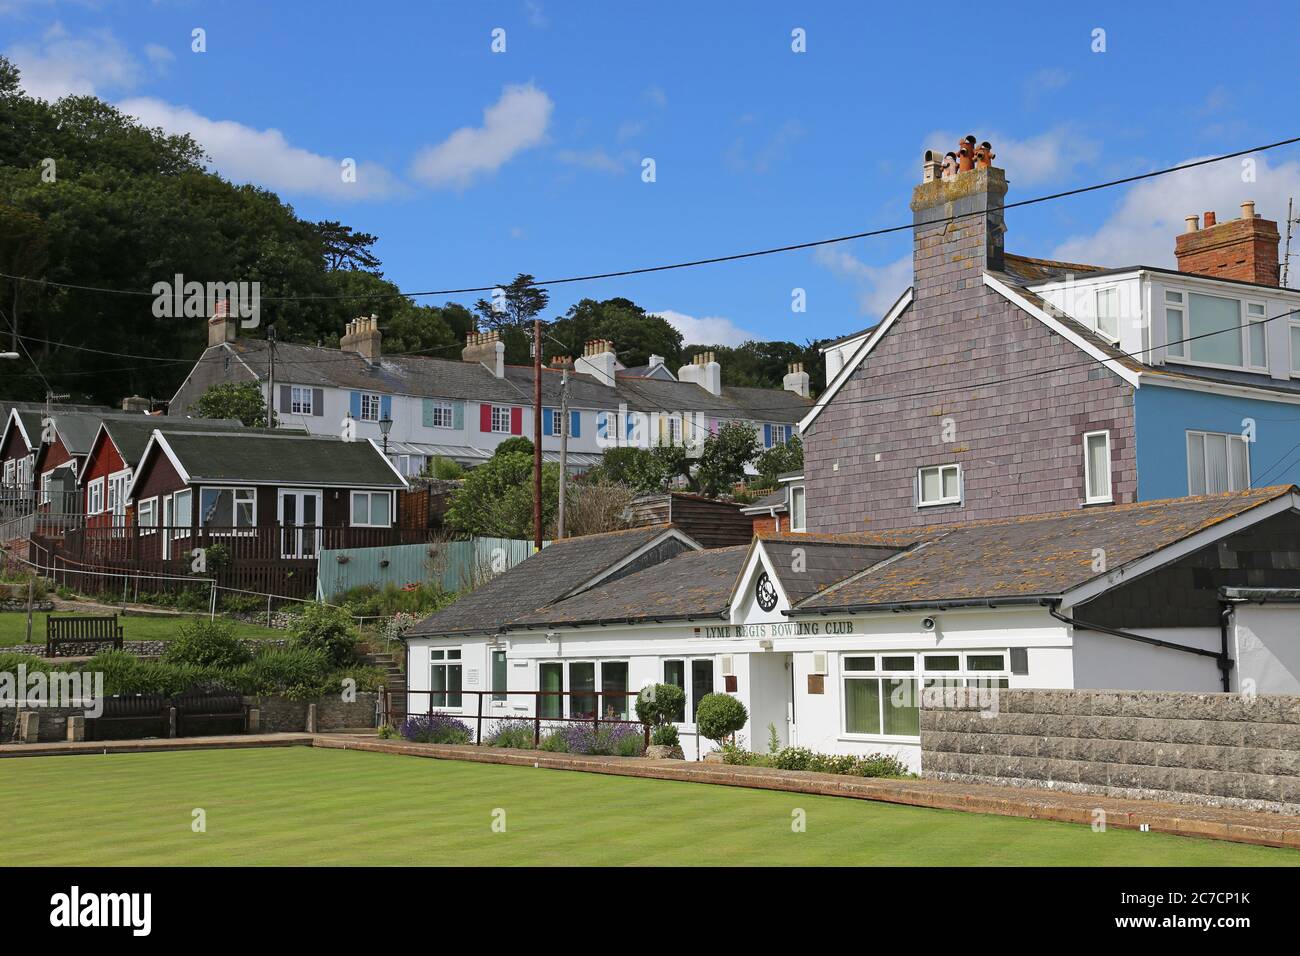 Lyme Regis Bowling Club, Charles Mercer Green, Monmouth Beach, Lyme Regis, Dorset, England, Great Britain, United Kingdom, UK, Europe Stock Photo